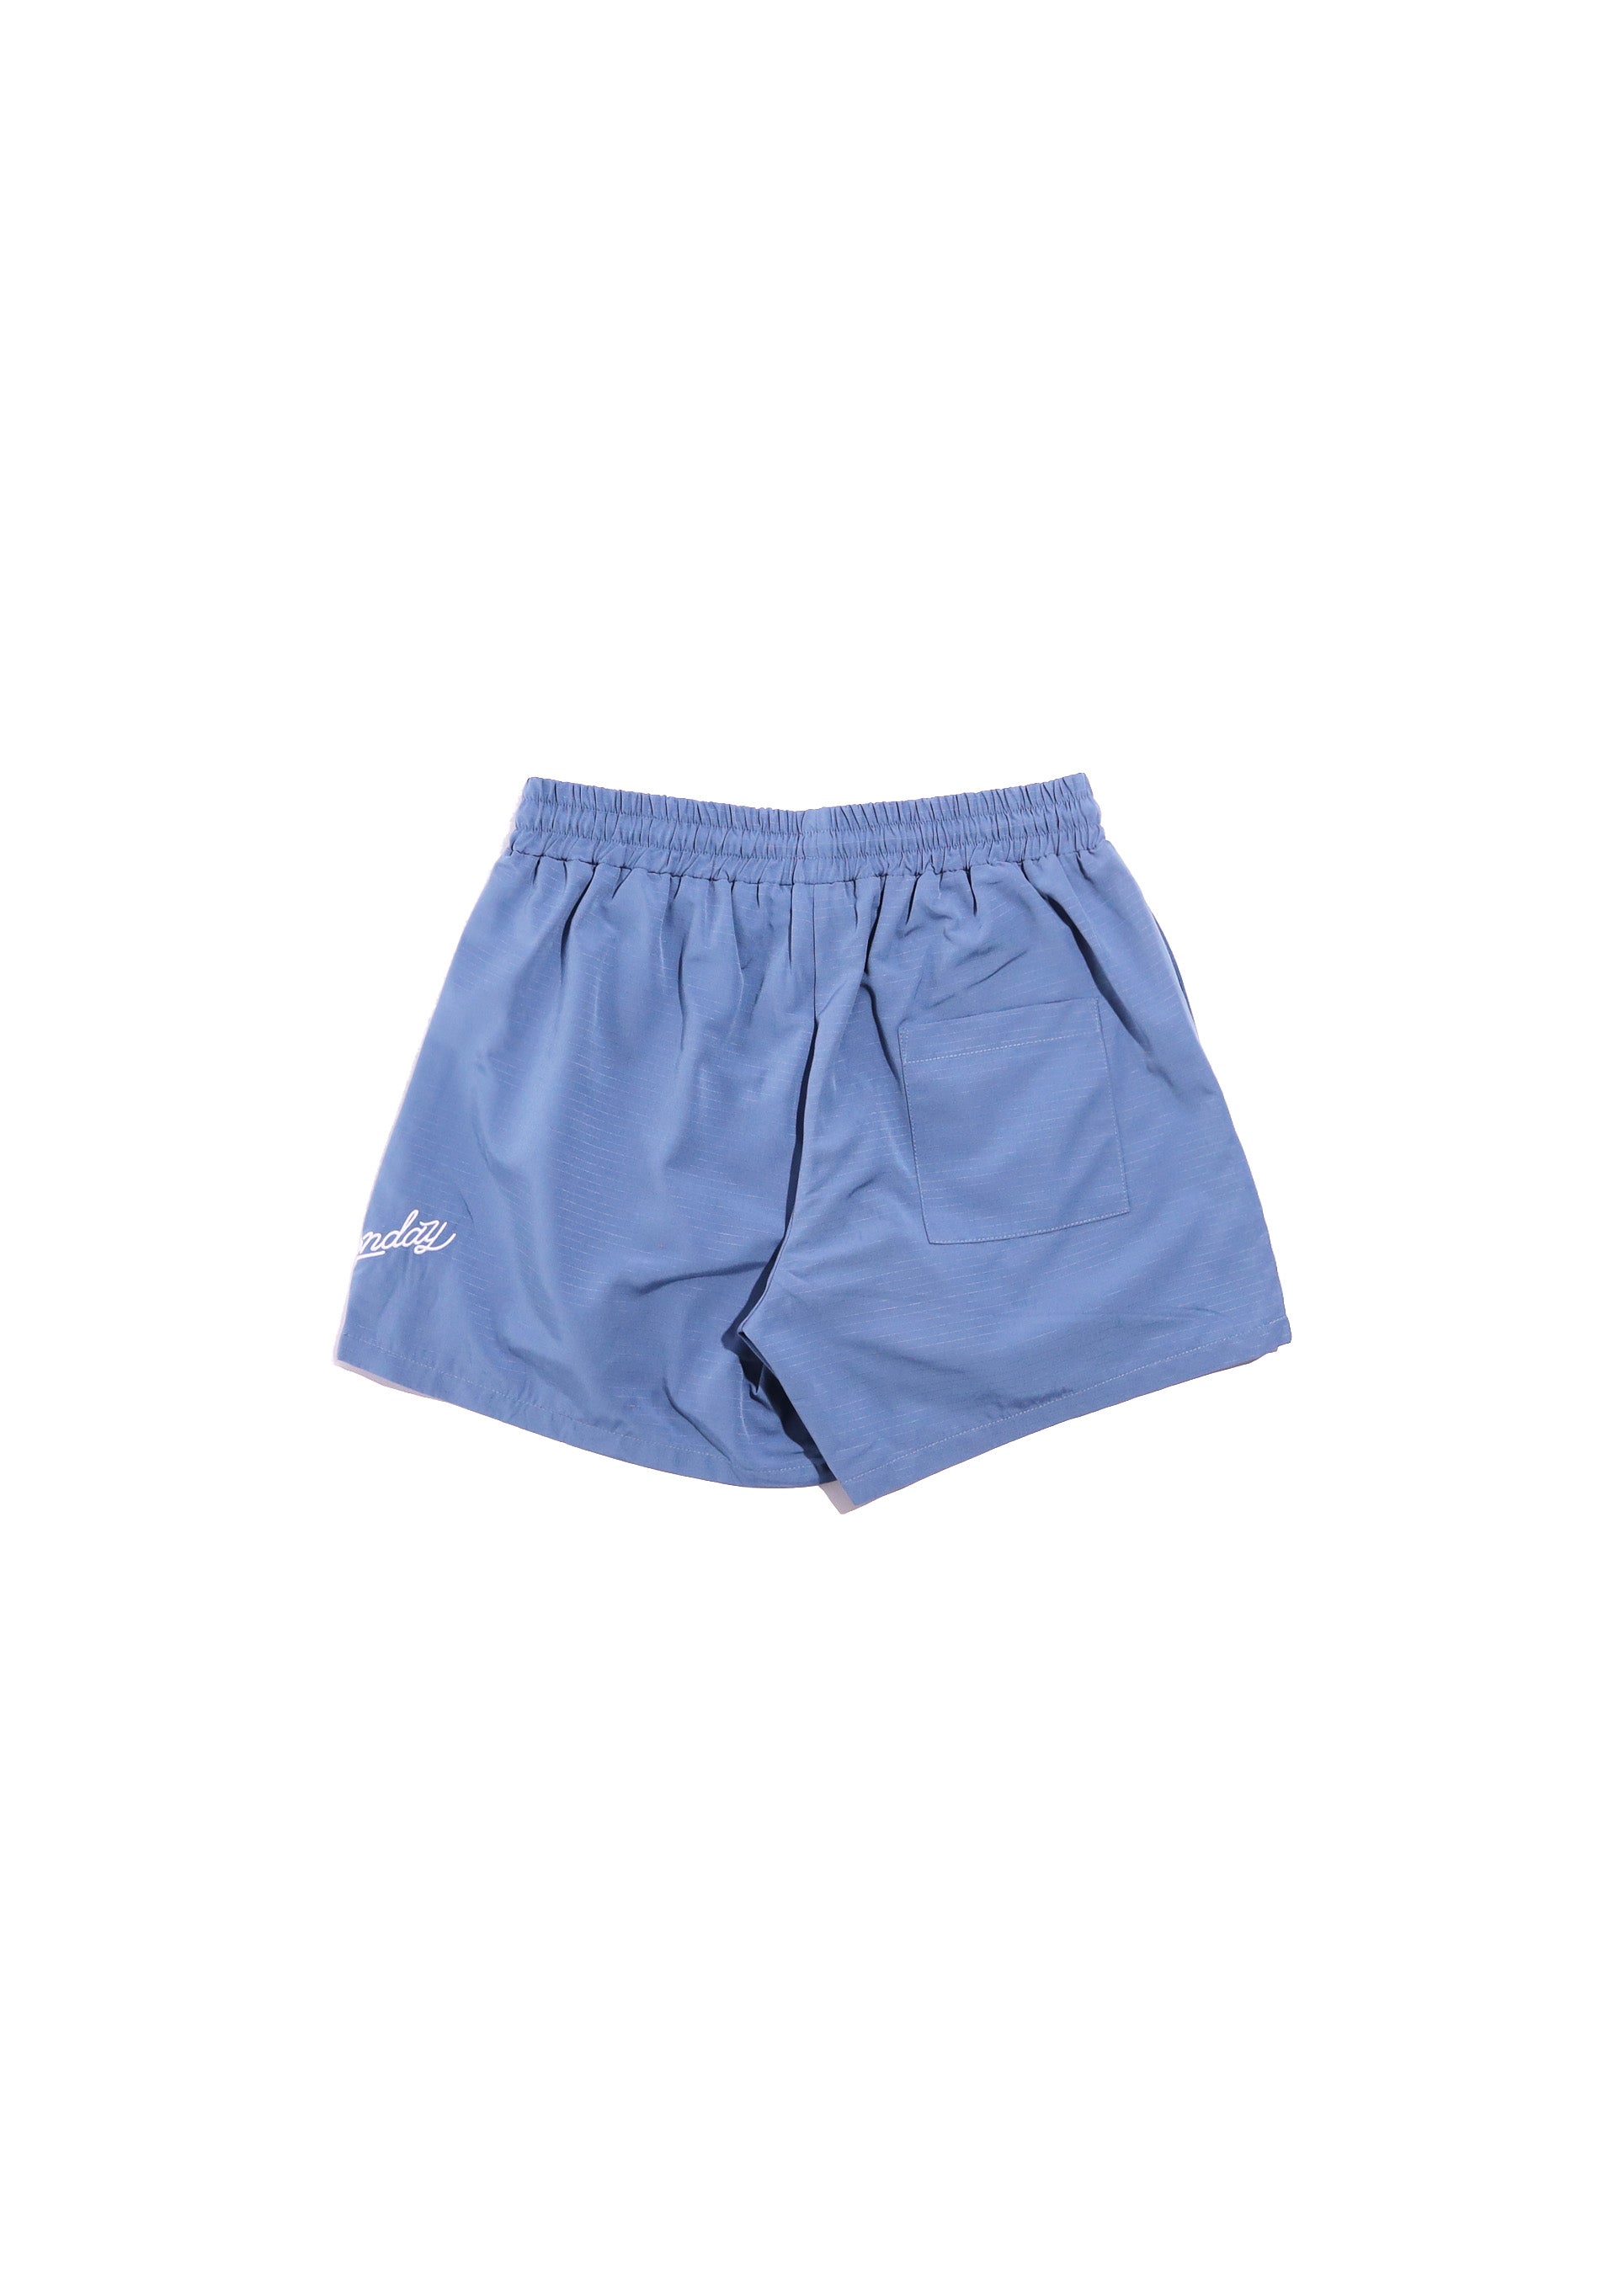 Cursive Ripstop Shorts - Blue